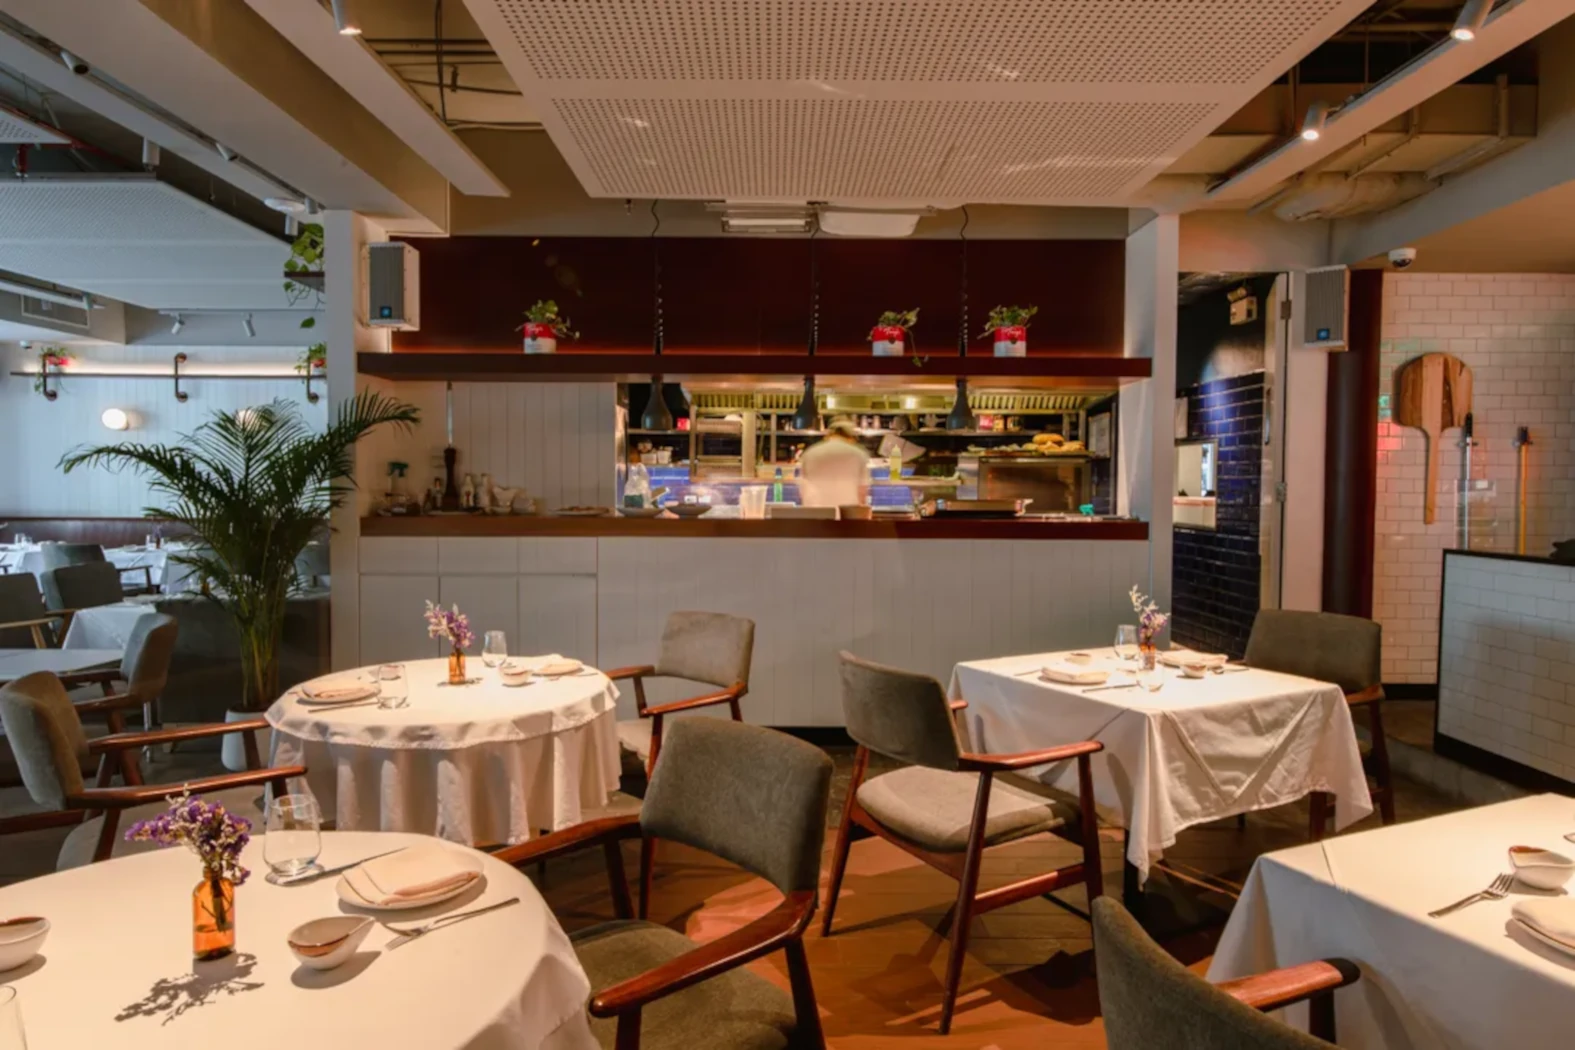 Tony's Bangkok restaurant with romantic table and open kitchen